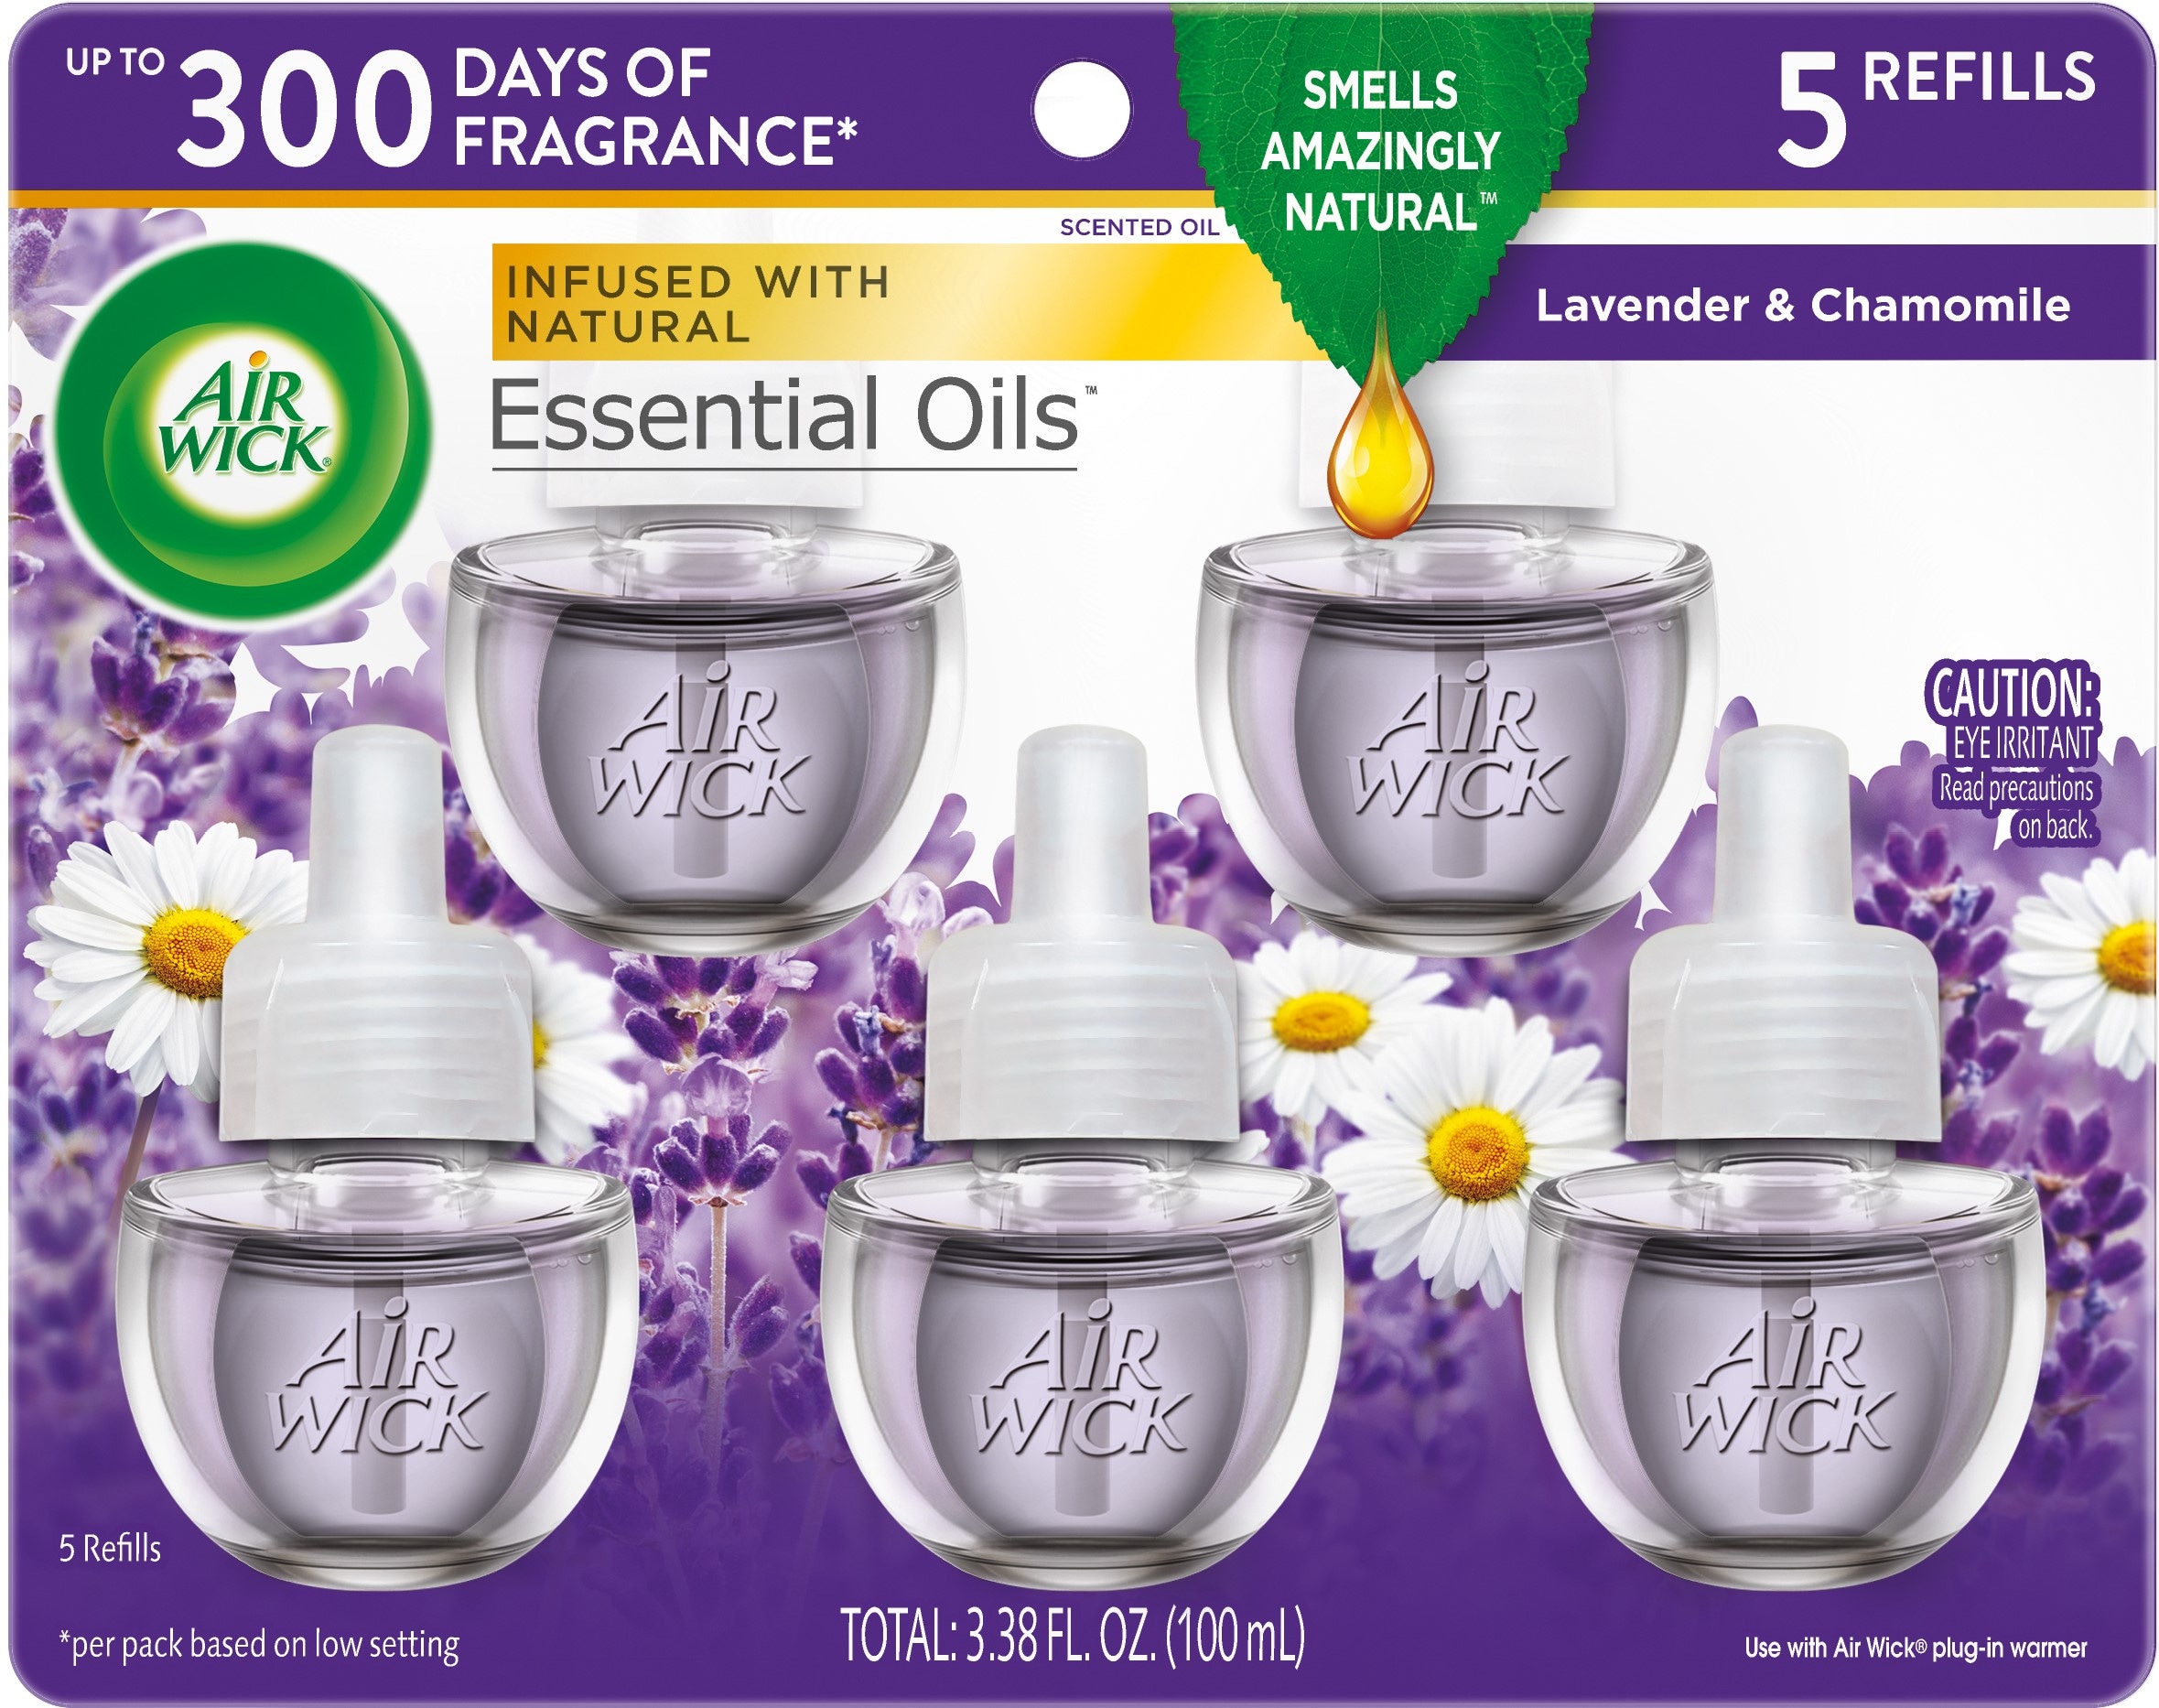 Air Wick Essential Oils Scented Oil Refills, Lavender & Chamomile - 5 refills, 3.38 fl oz